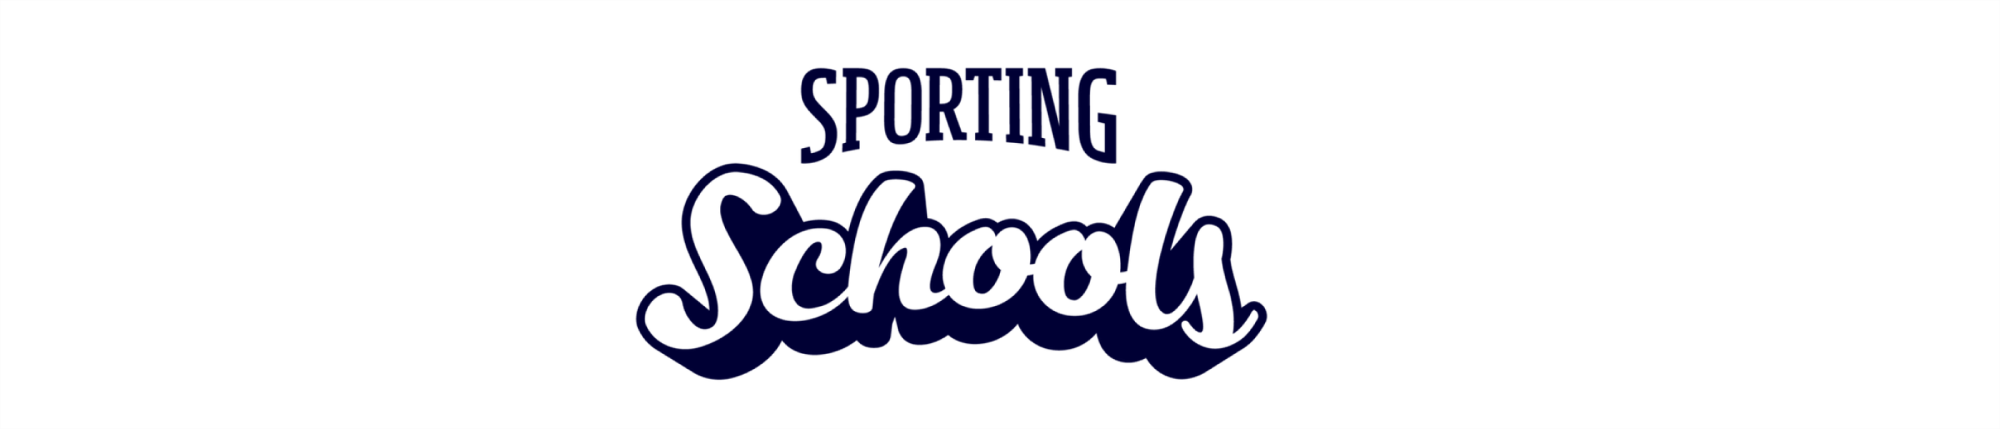 Sporting Schools_banner